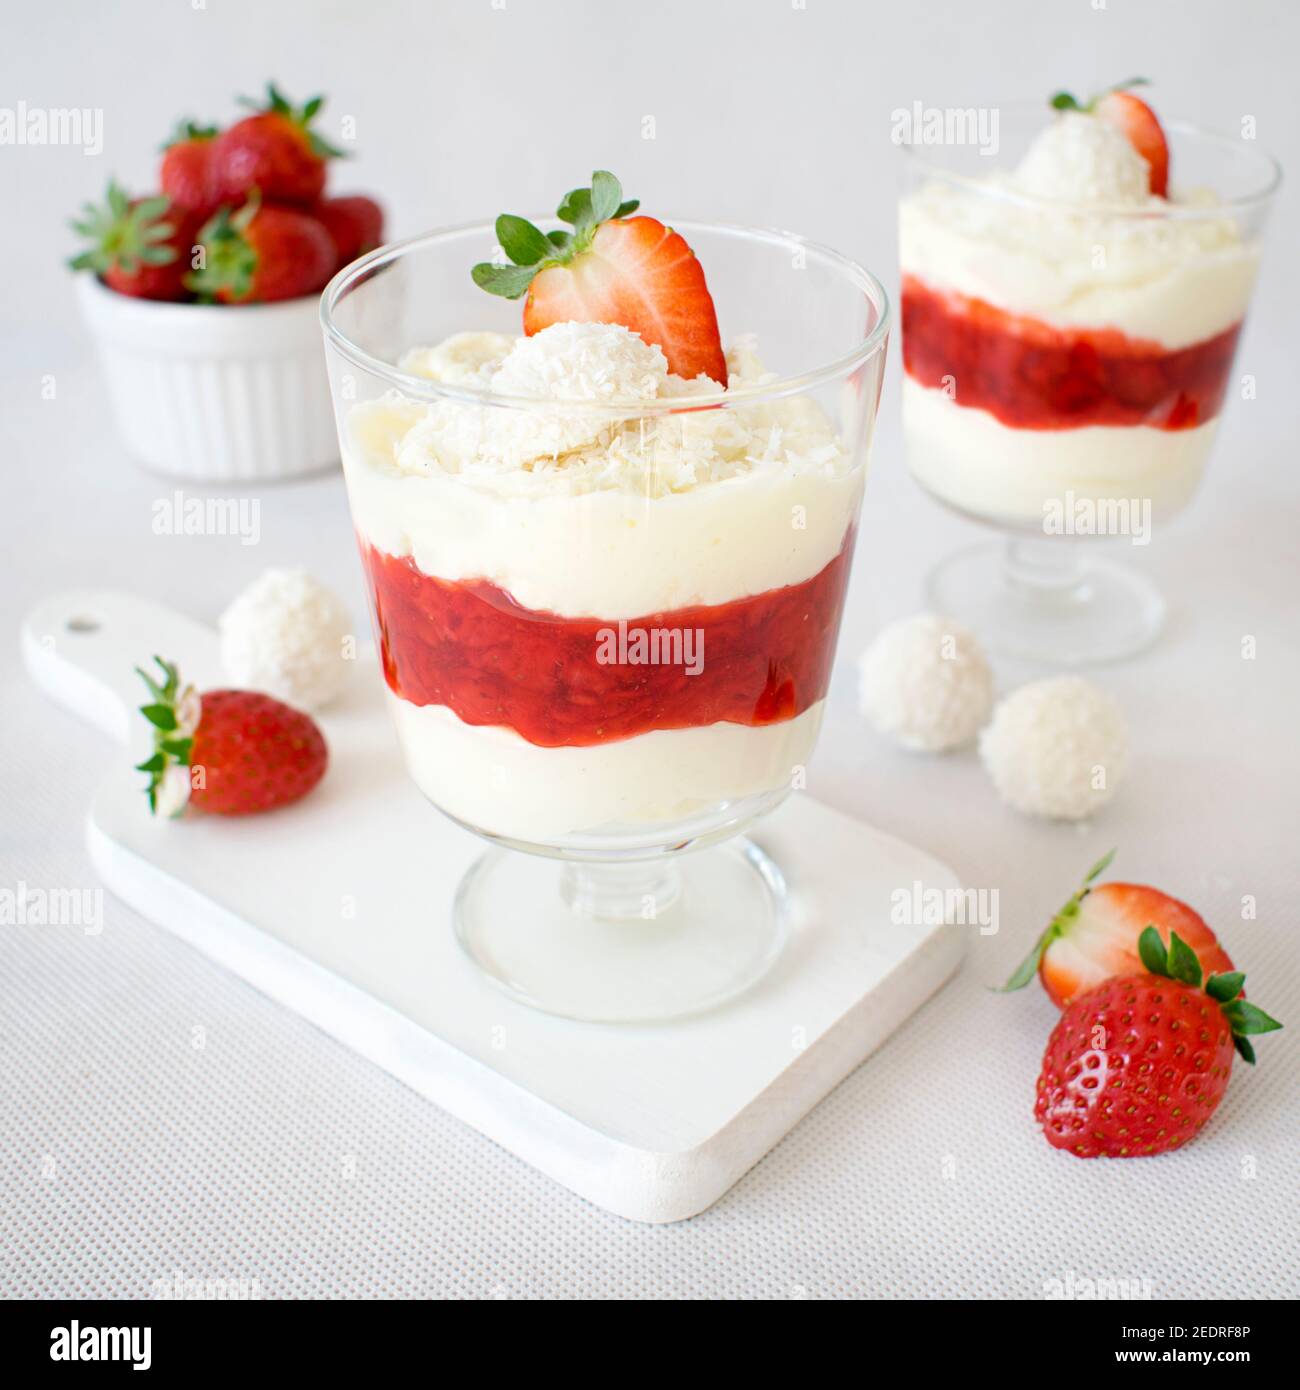 Coconut dessert with strawberry mousse. Fluffy cream with Raffaello balls, white chocolate and fresh strawberries. Stock Photo